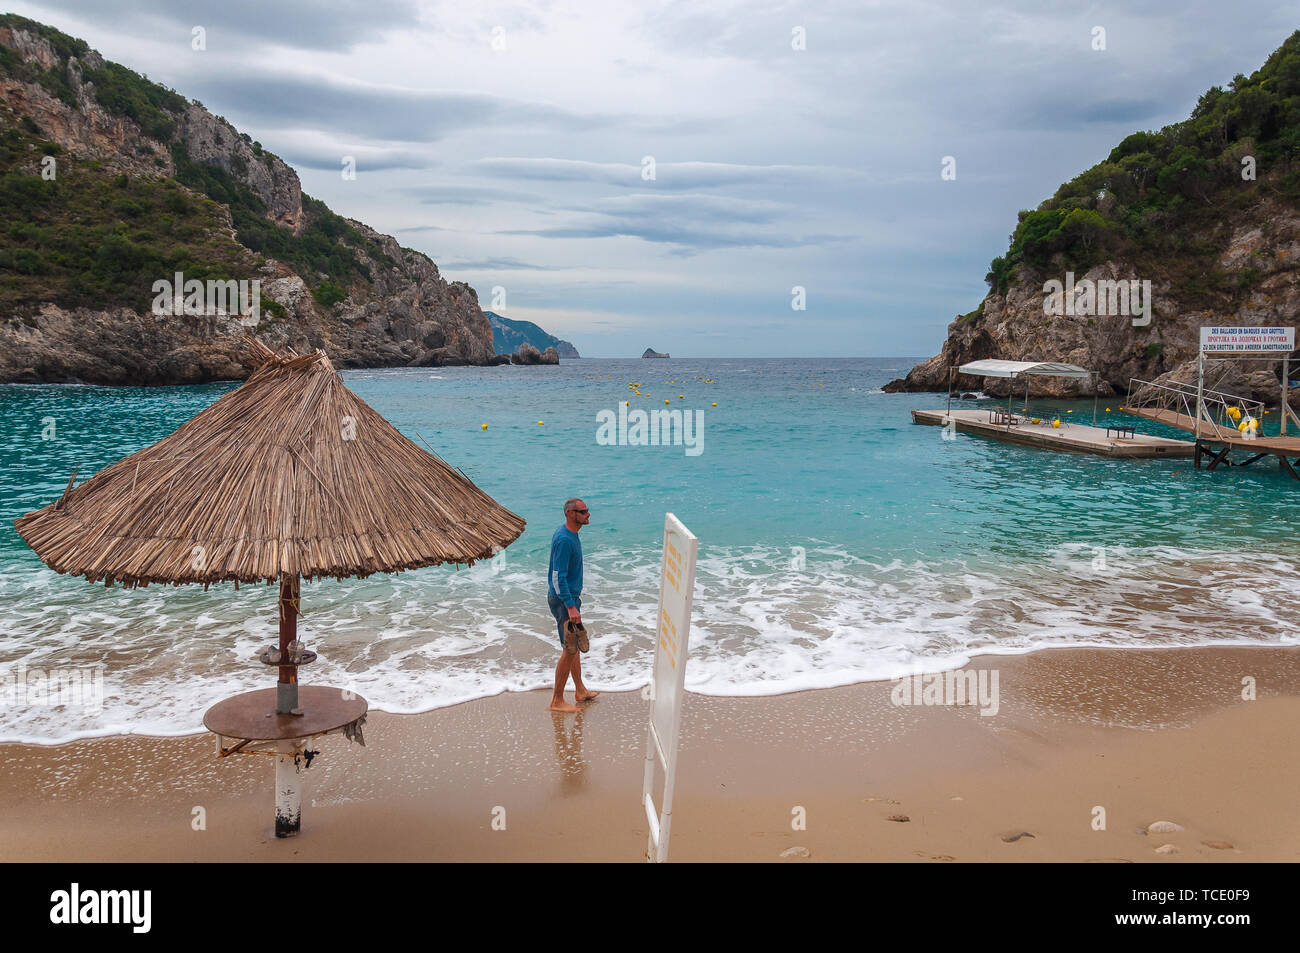 CORFU GREECE - OCTOBER 23 2018: Man on the Paleokastritsa bay beach with Kolyviri island background Stock Photo